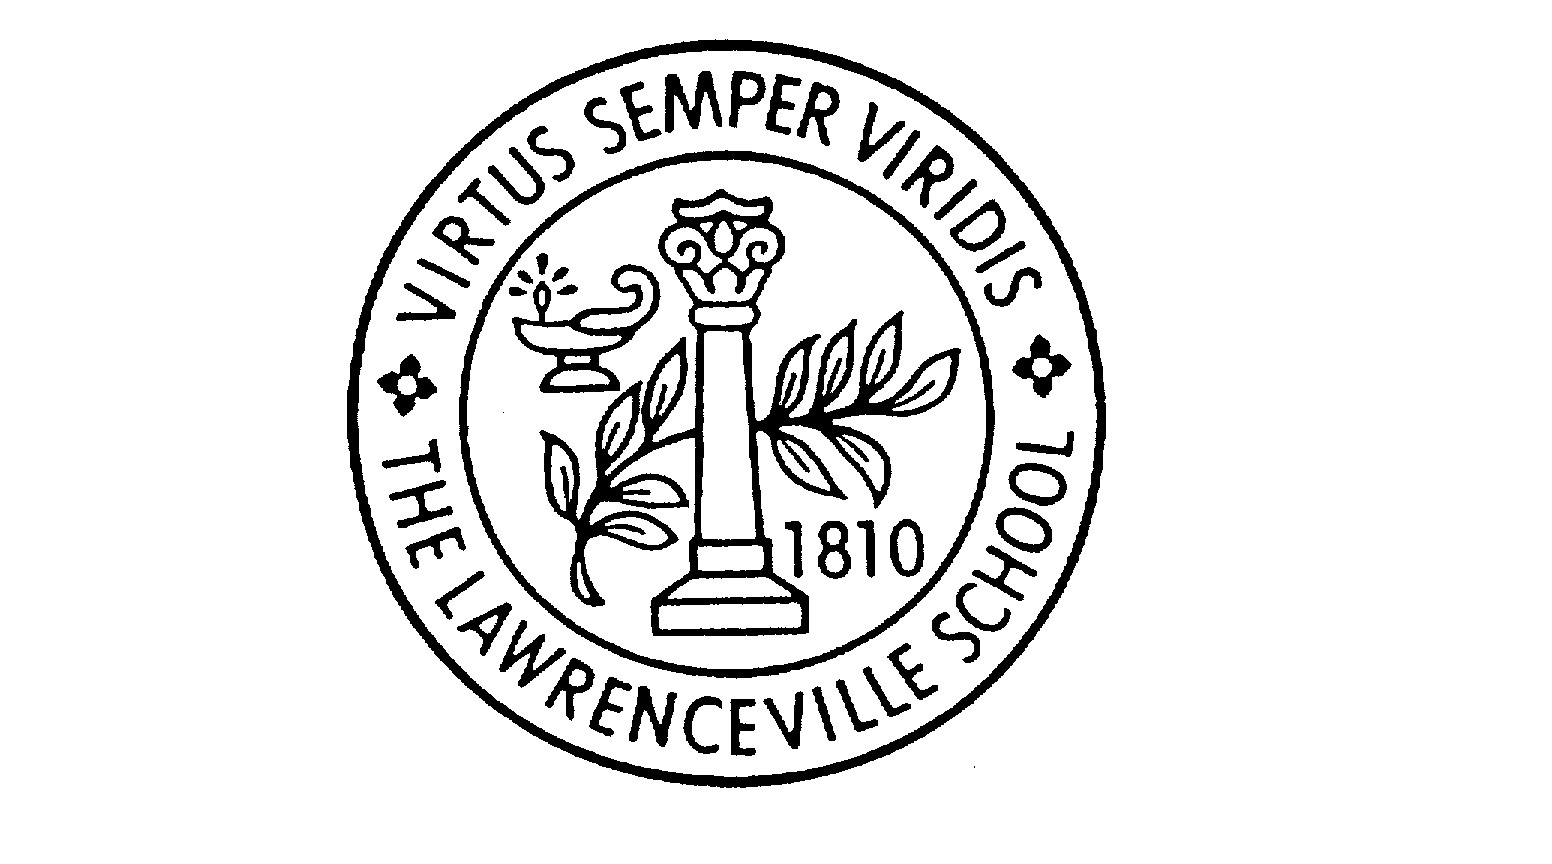  VIRTUS SEMPER VIRIDIS THE LAWRENCEVILLE SCHOOL